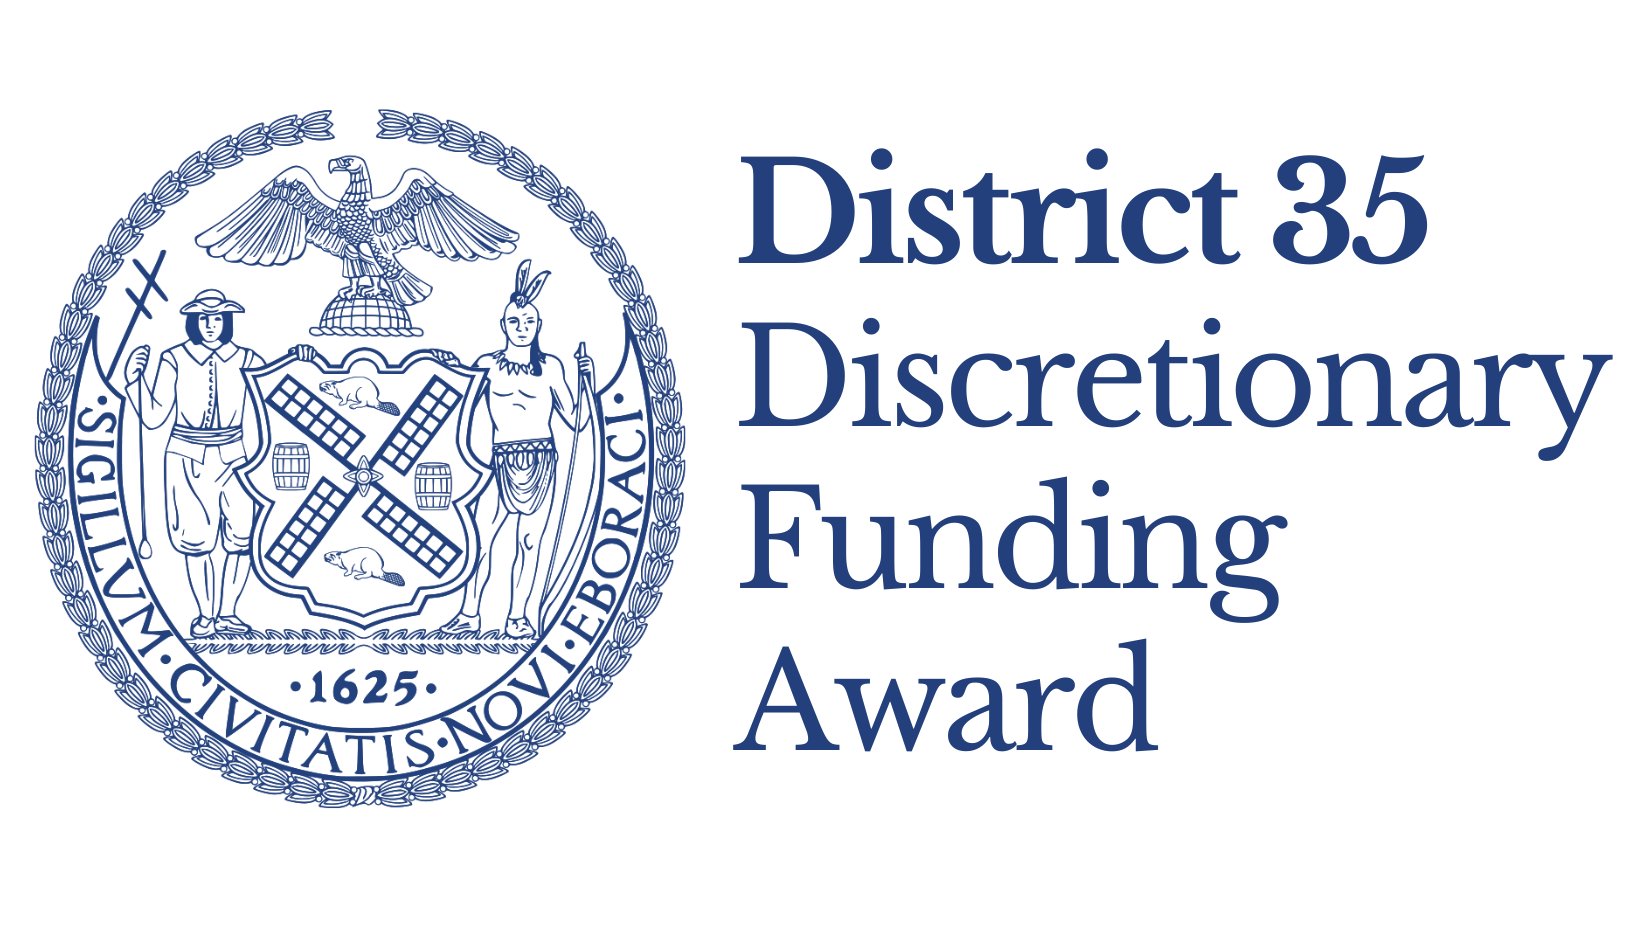 Distrct 35 Discretionary Funding Award .png